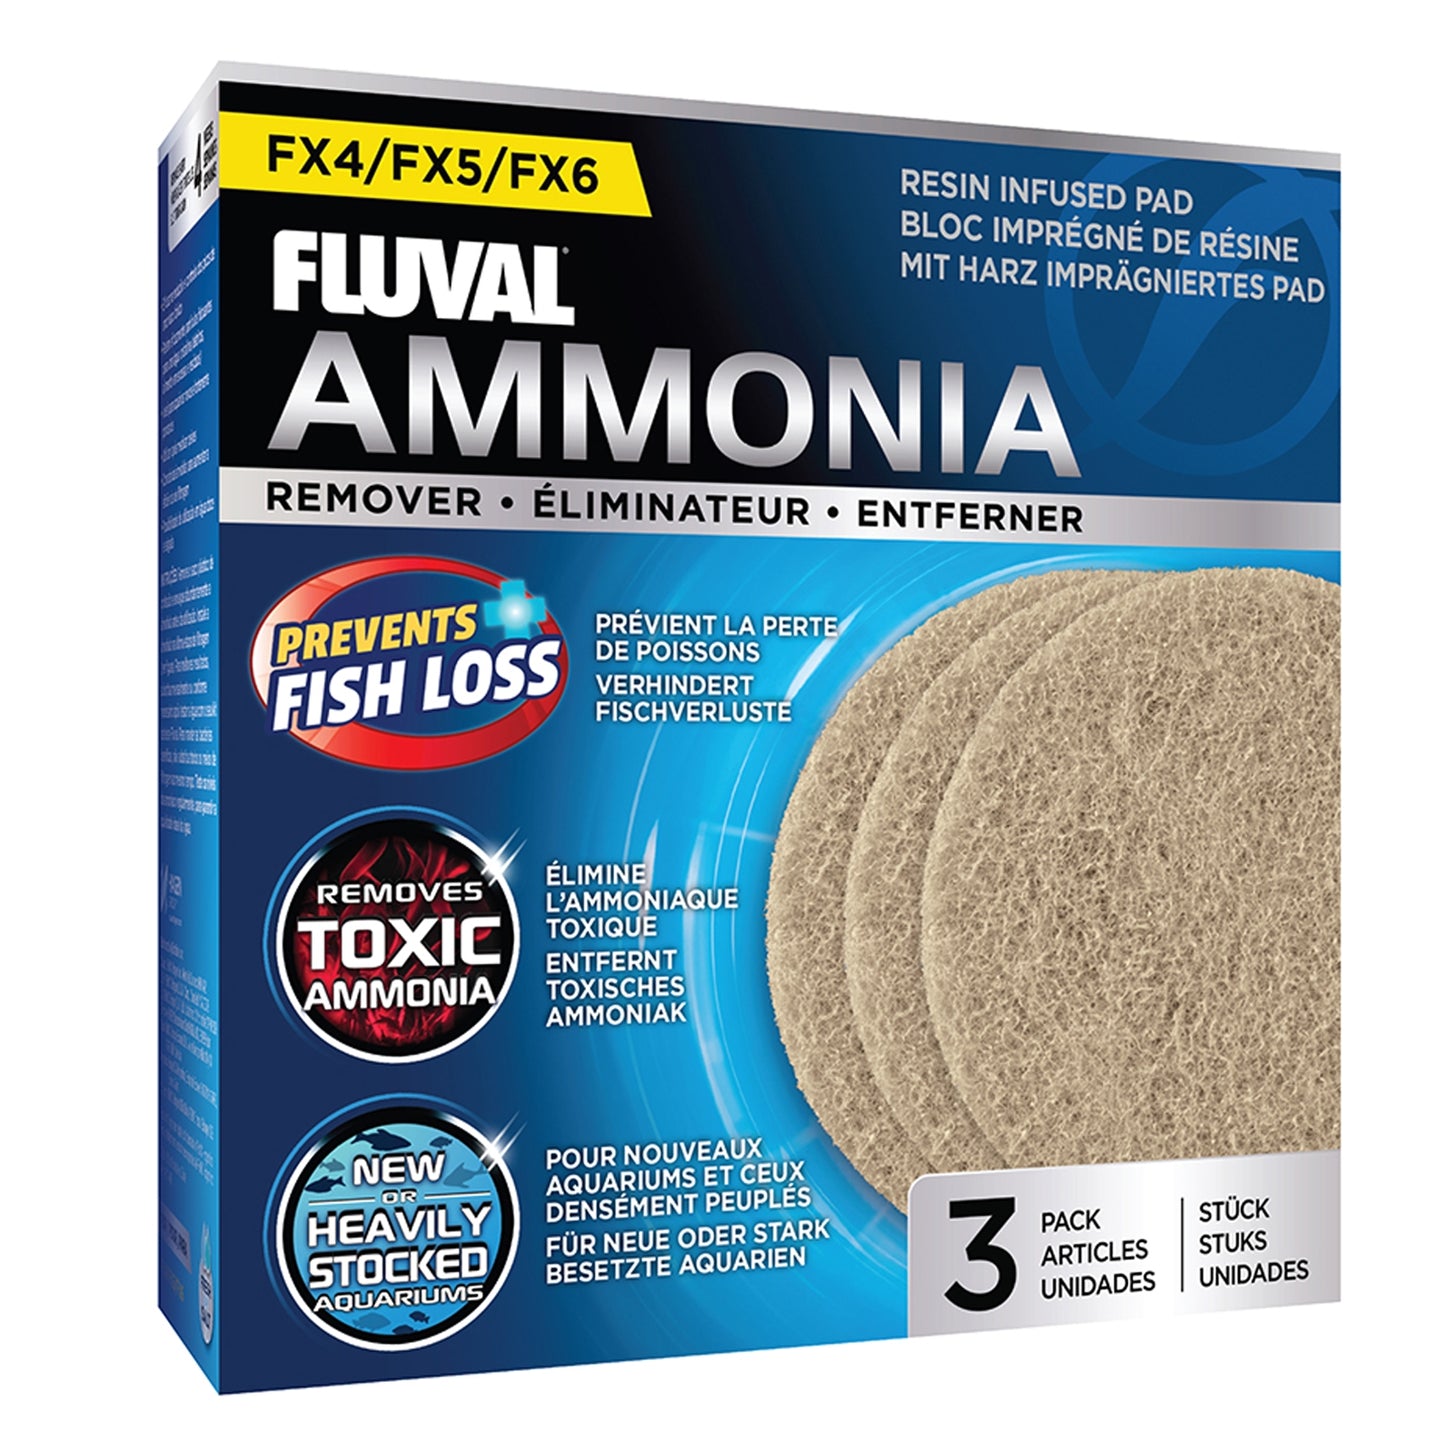 Fluval FX4/FX5/FX6 Resin-Infused Ammonia Remover